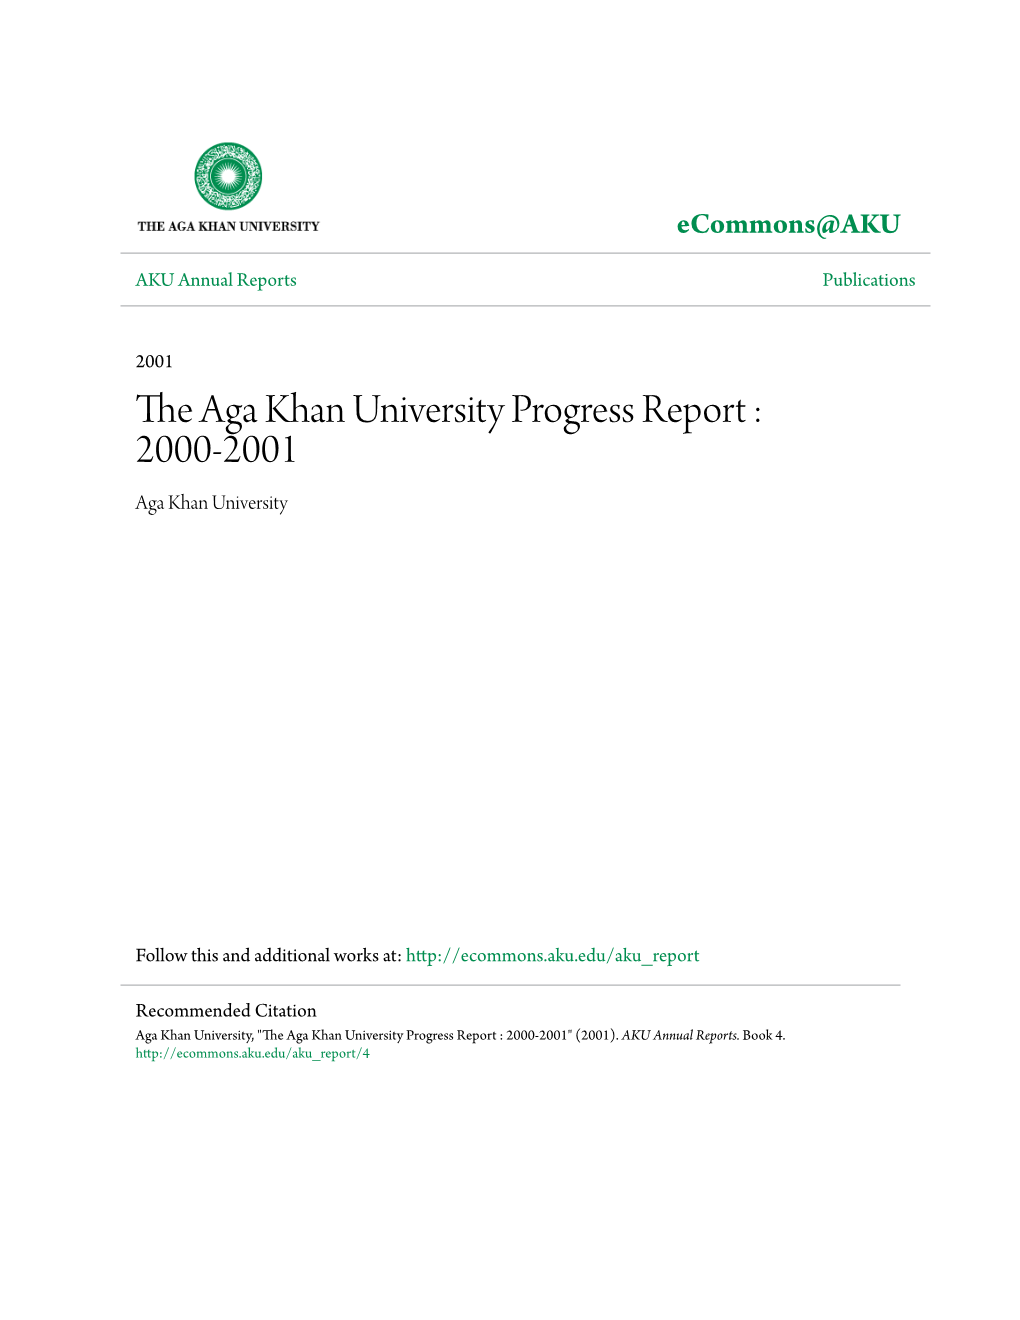 The Aga Khan University Progress Report : 2000-2001 Aga Khan University